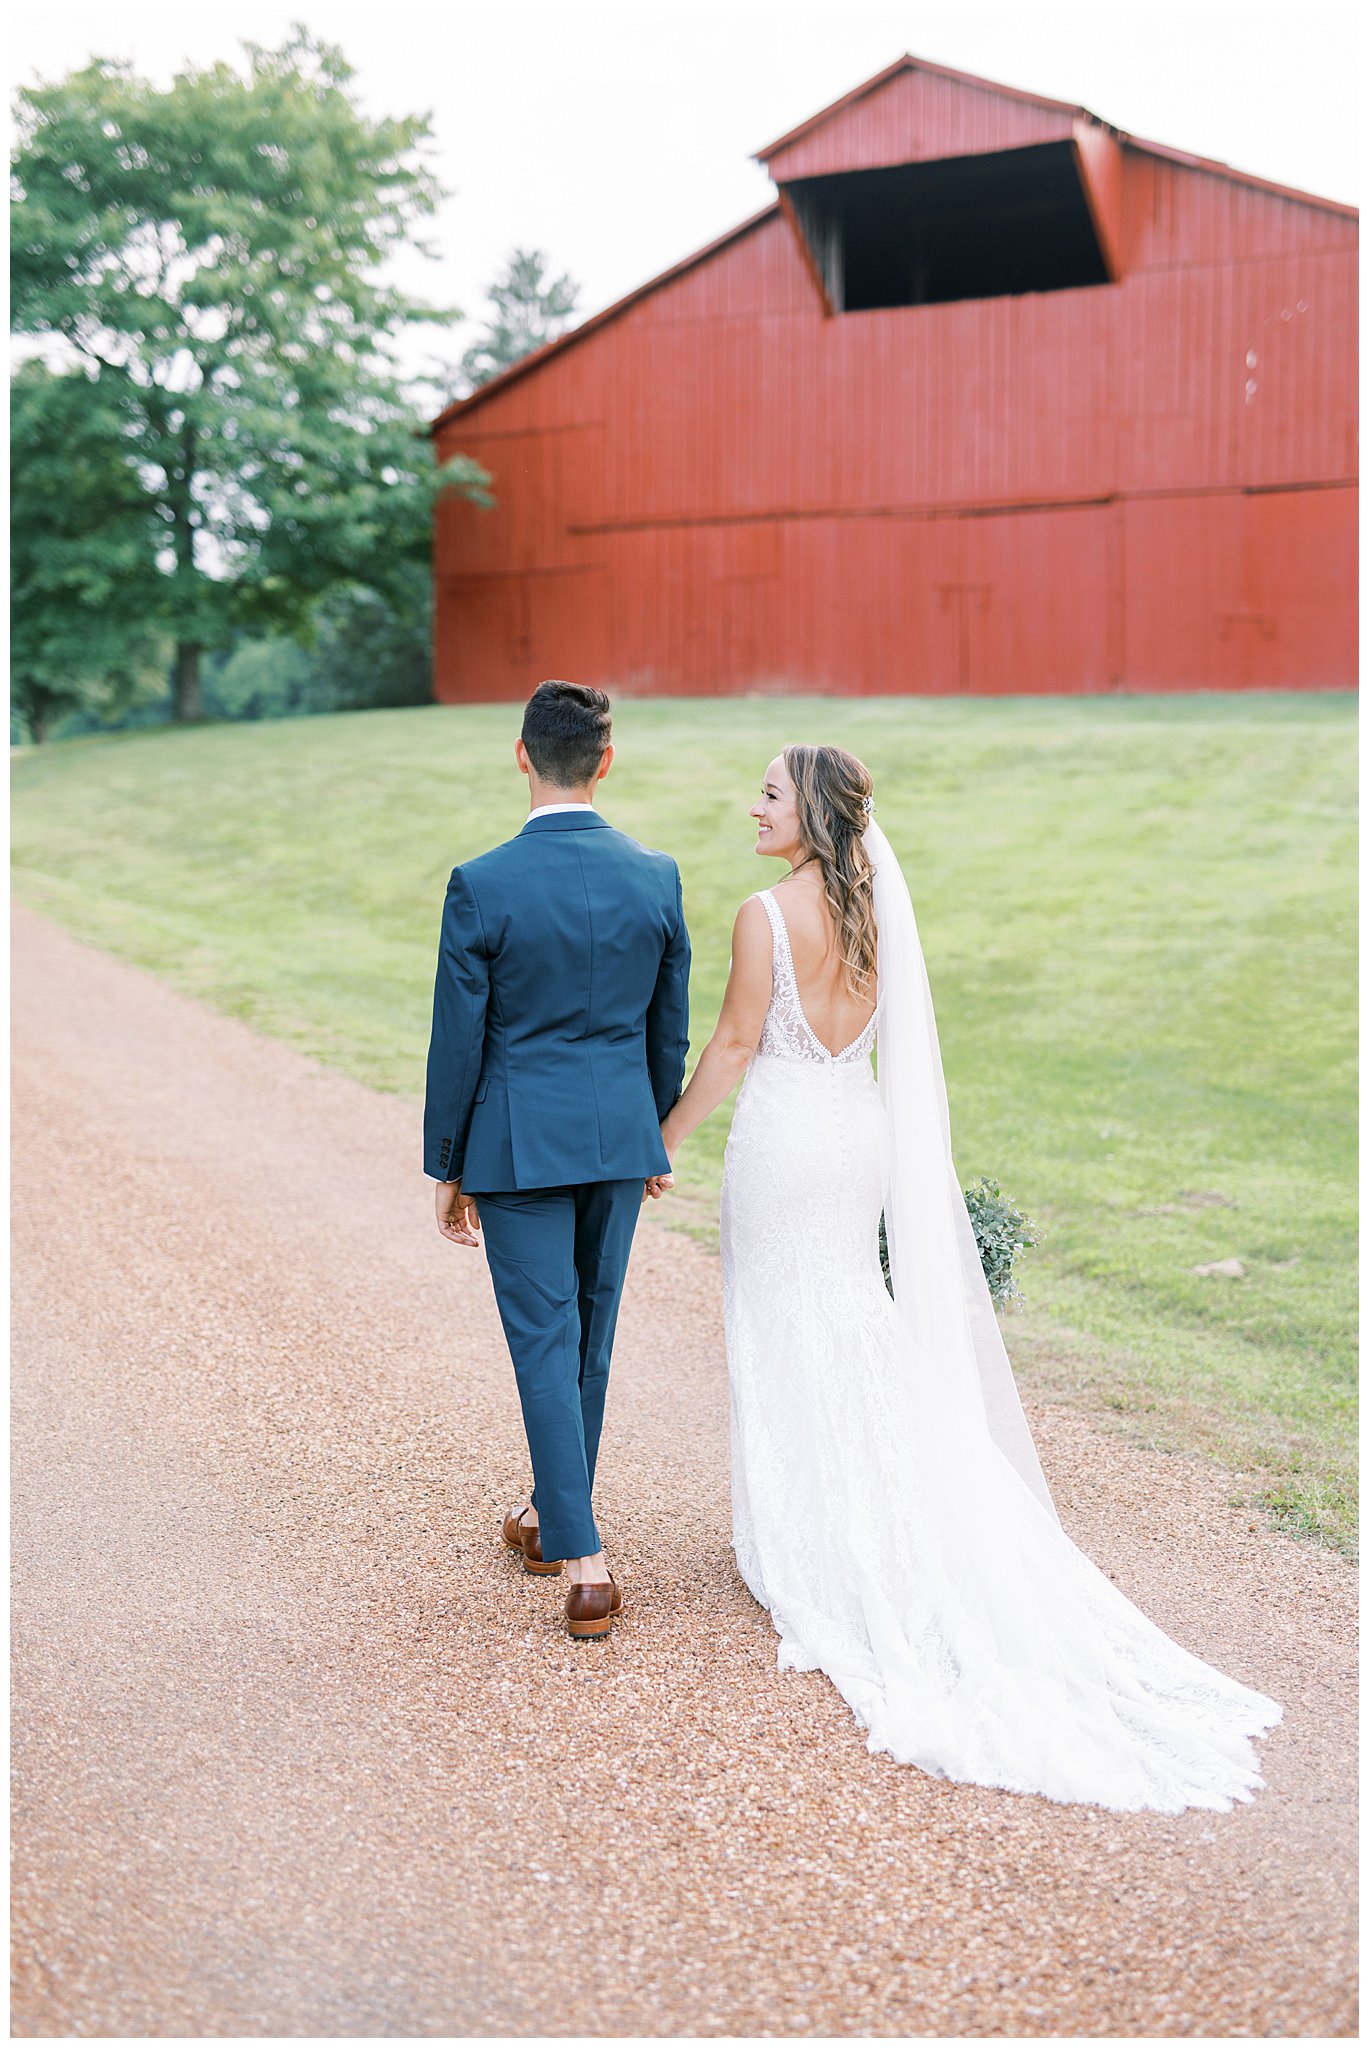 newlyweds walk together along gravel path